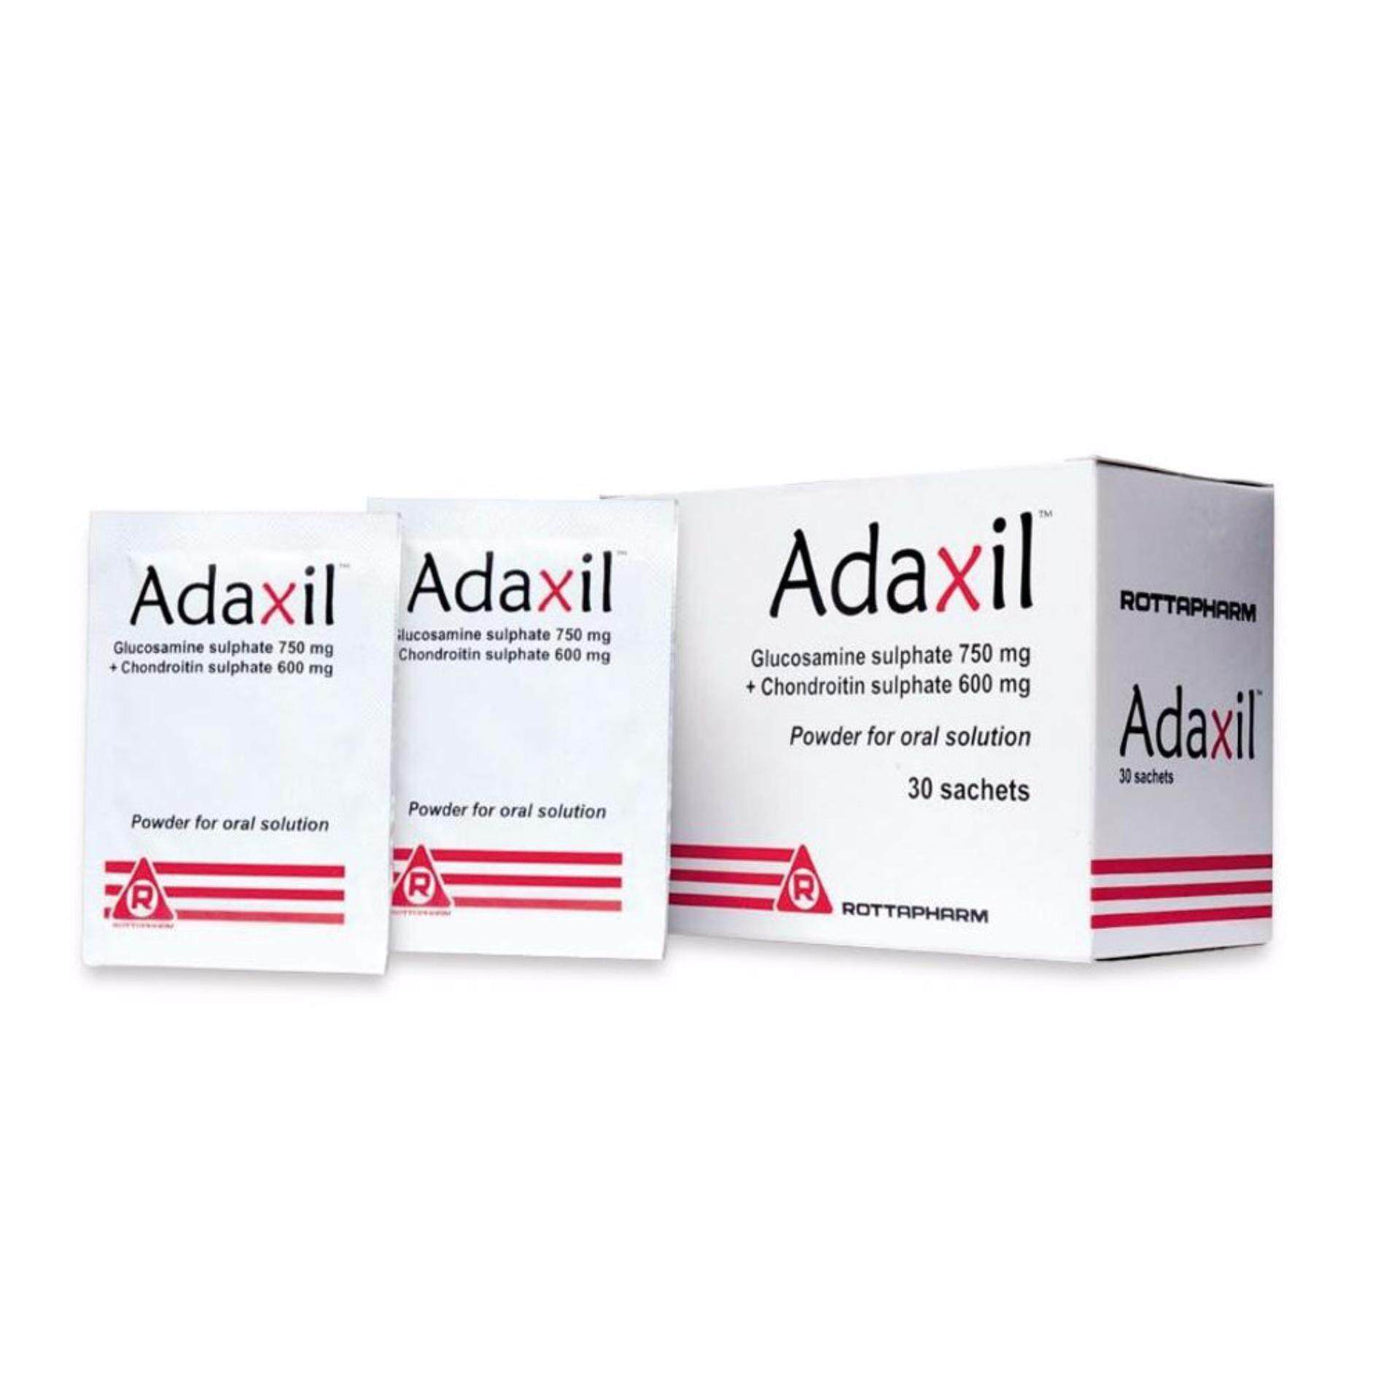 ADAXIL GLUCOSAMINE + CHONDROITIN POWDER 30's